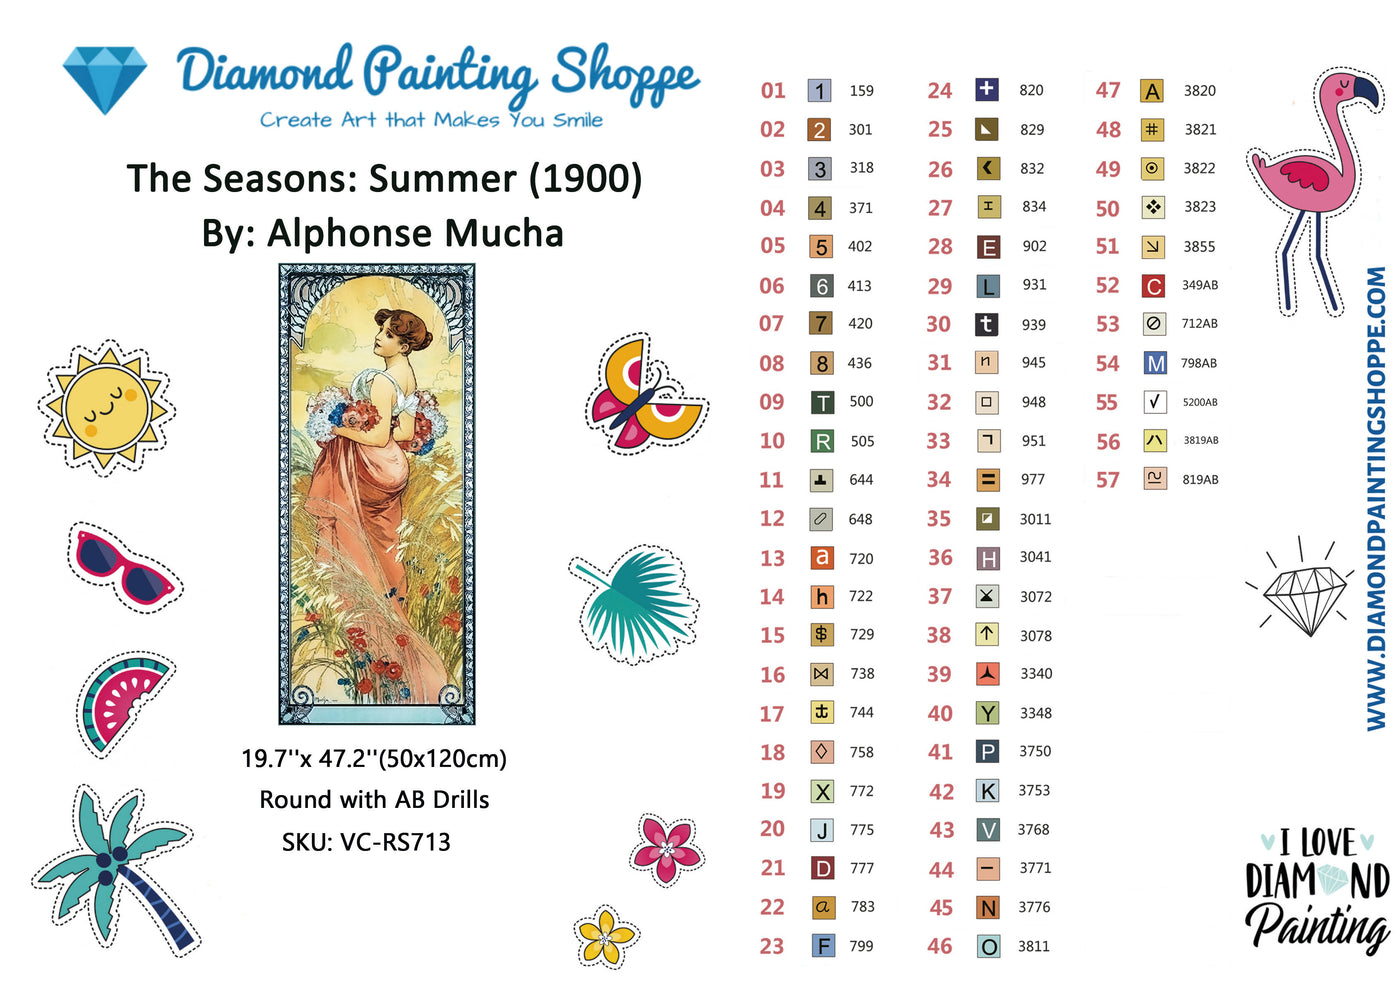 The Seasons: Summer (1900)